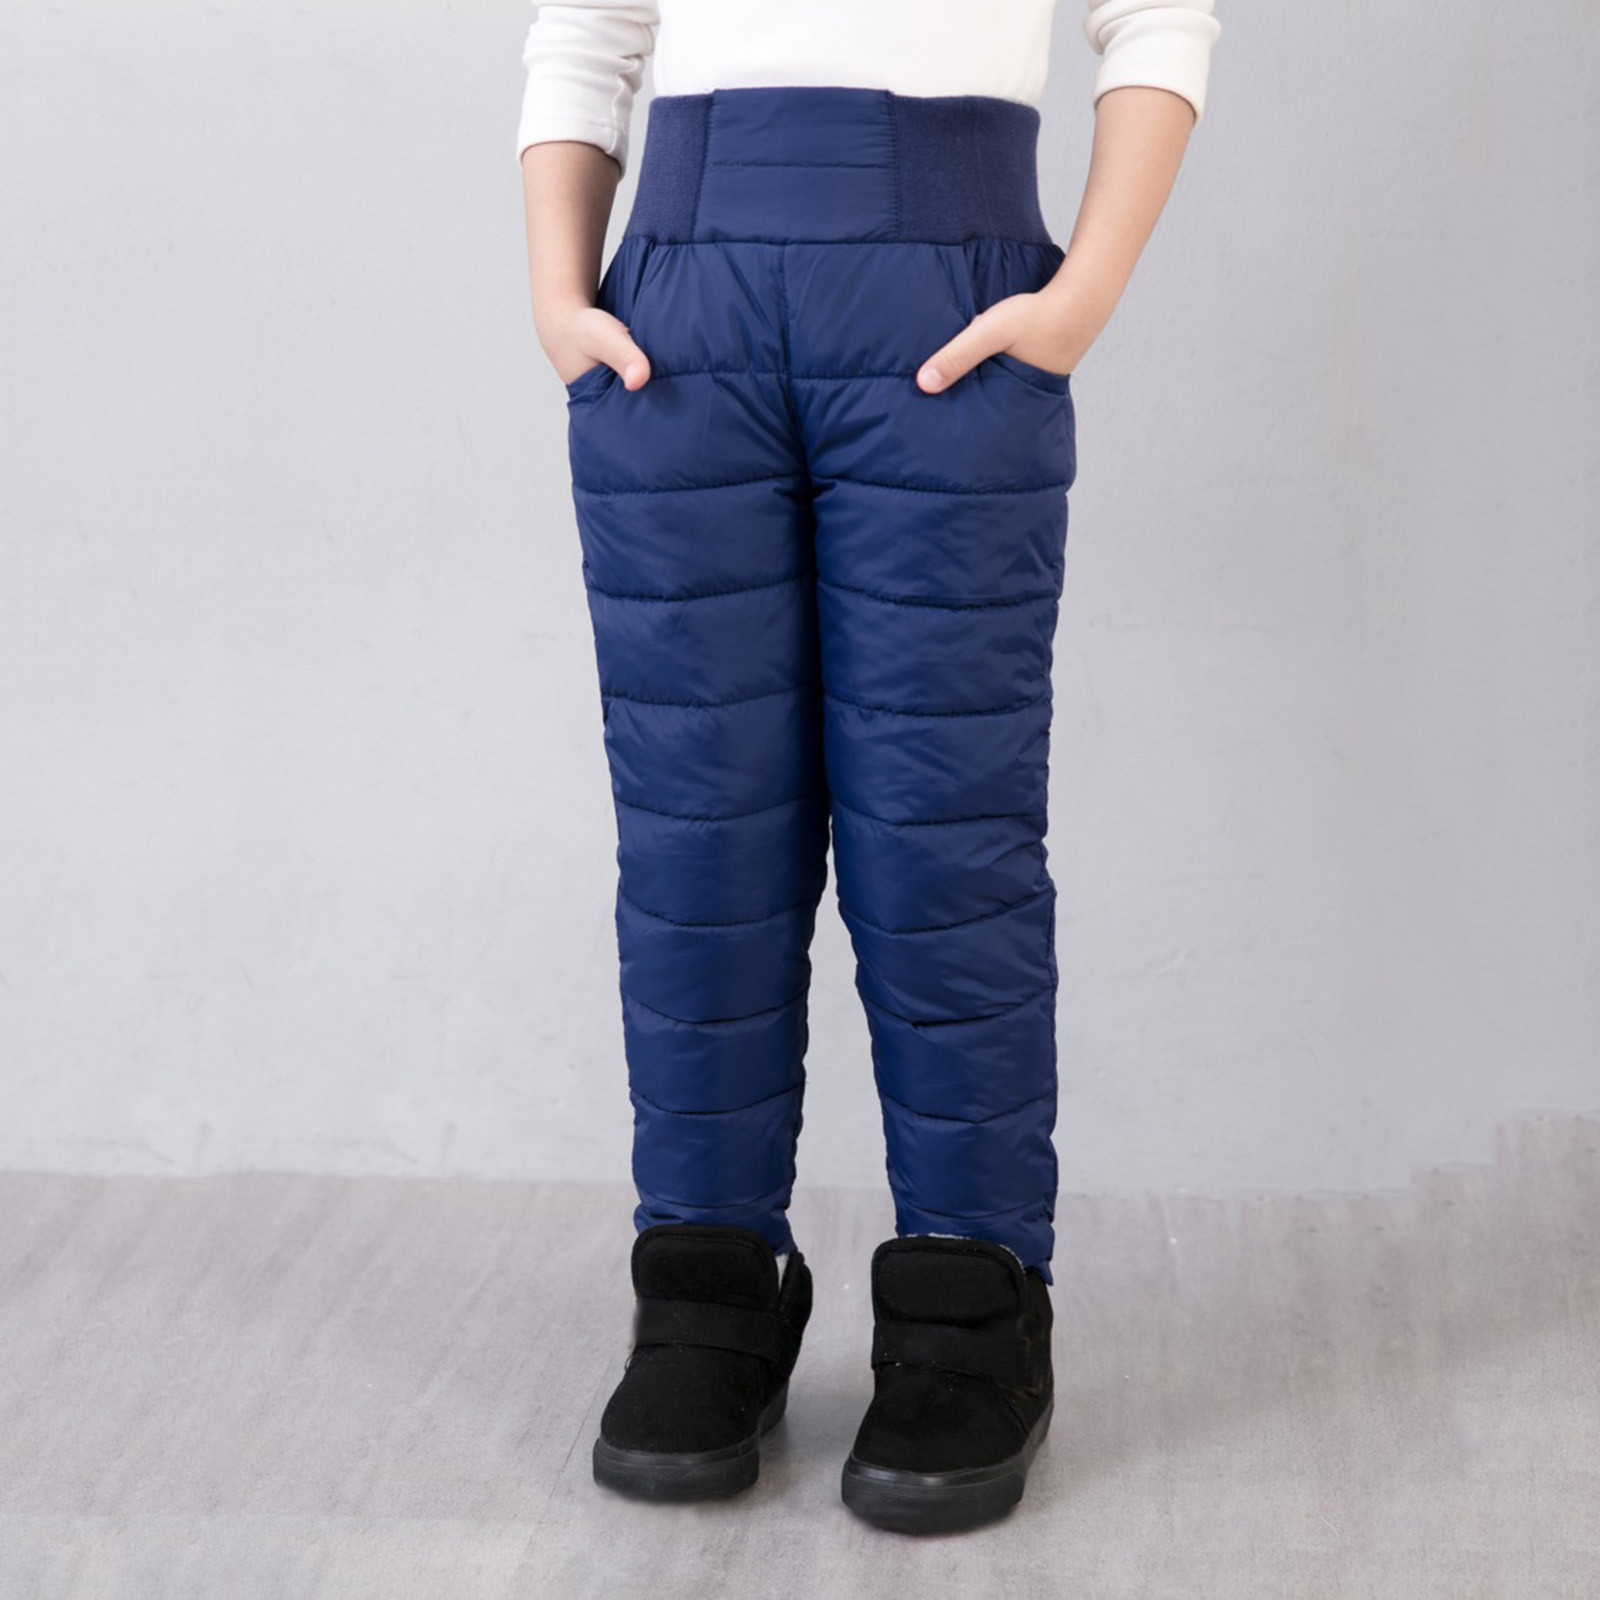 nsendm Boys Snow Bibs Size 8-10 Little Girls Boys Solid Snow Pants ...